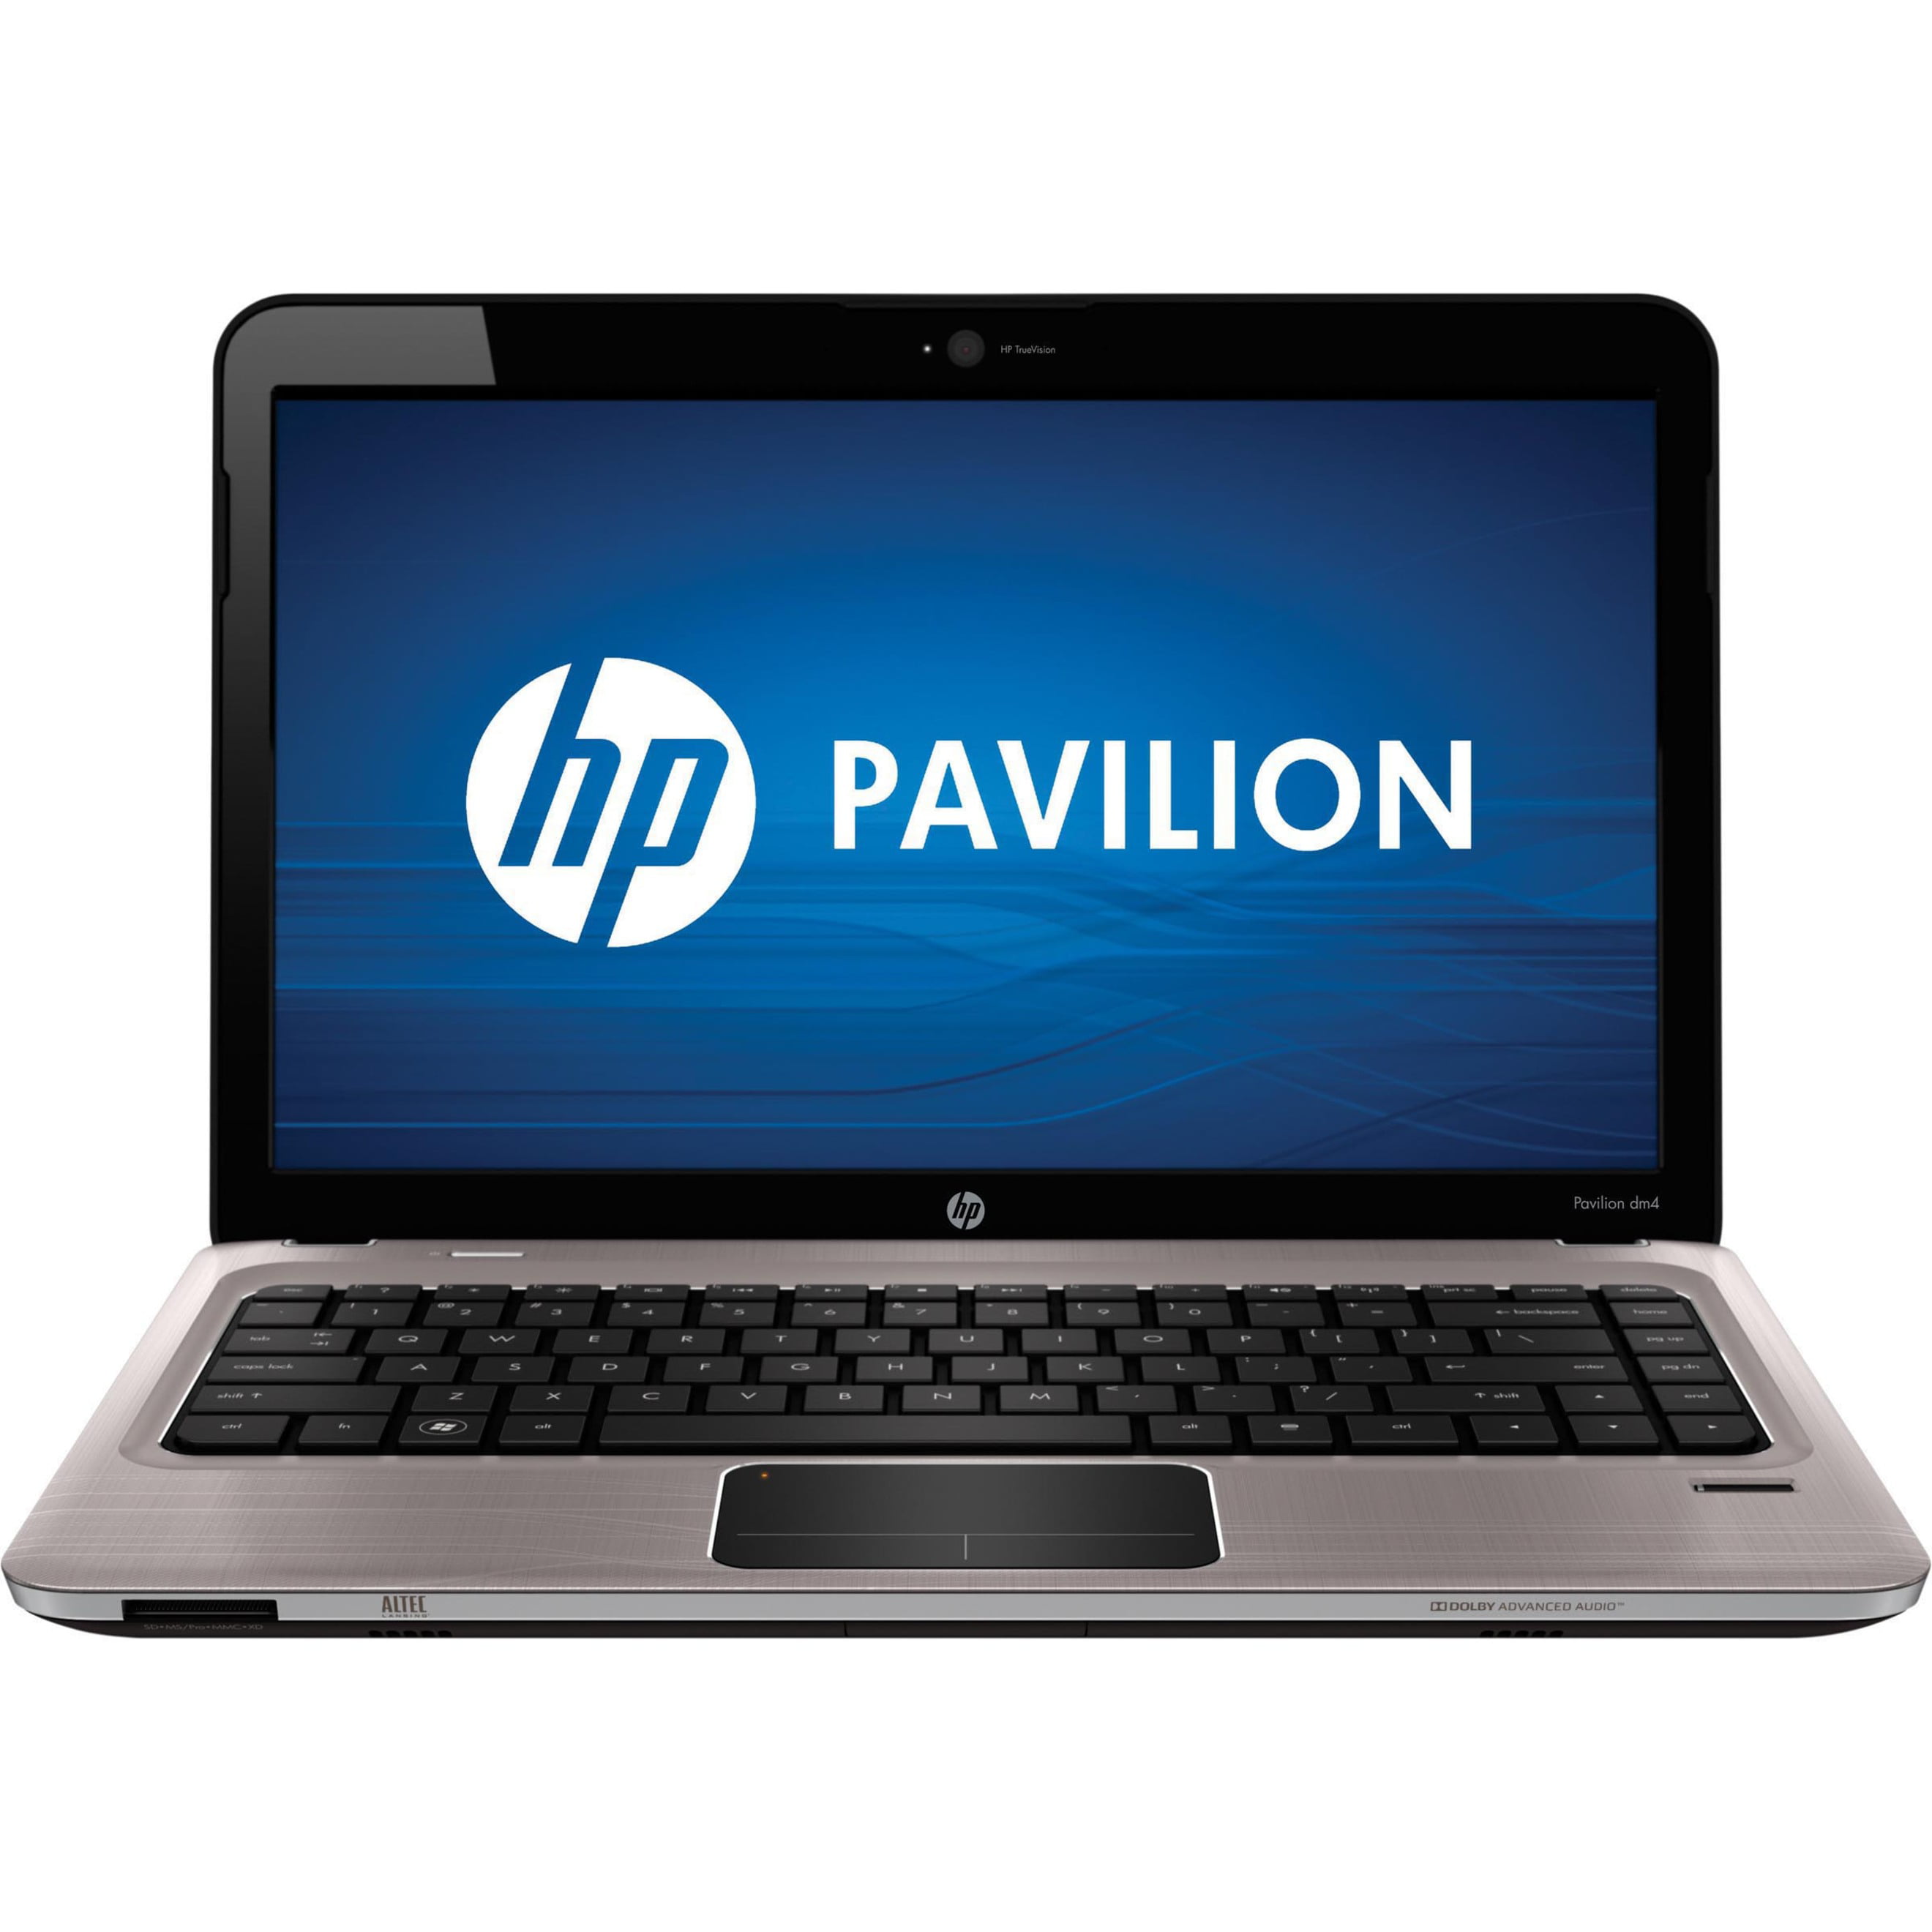 Mount Bank buiten gebruik aflevering HP Pavilion Laptop dm4-1277sb - Intel Core i5 460M / 2.53 GHz - Win 7 Pro  64-bit - HD Graphics - 4 GB RAM - 500 GB HDD - DVD SuperMulti -